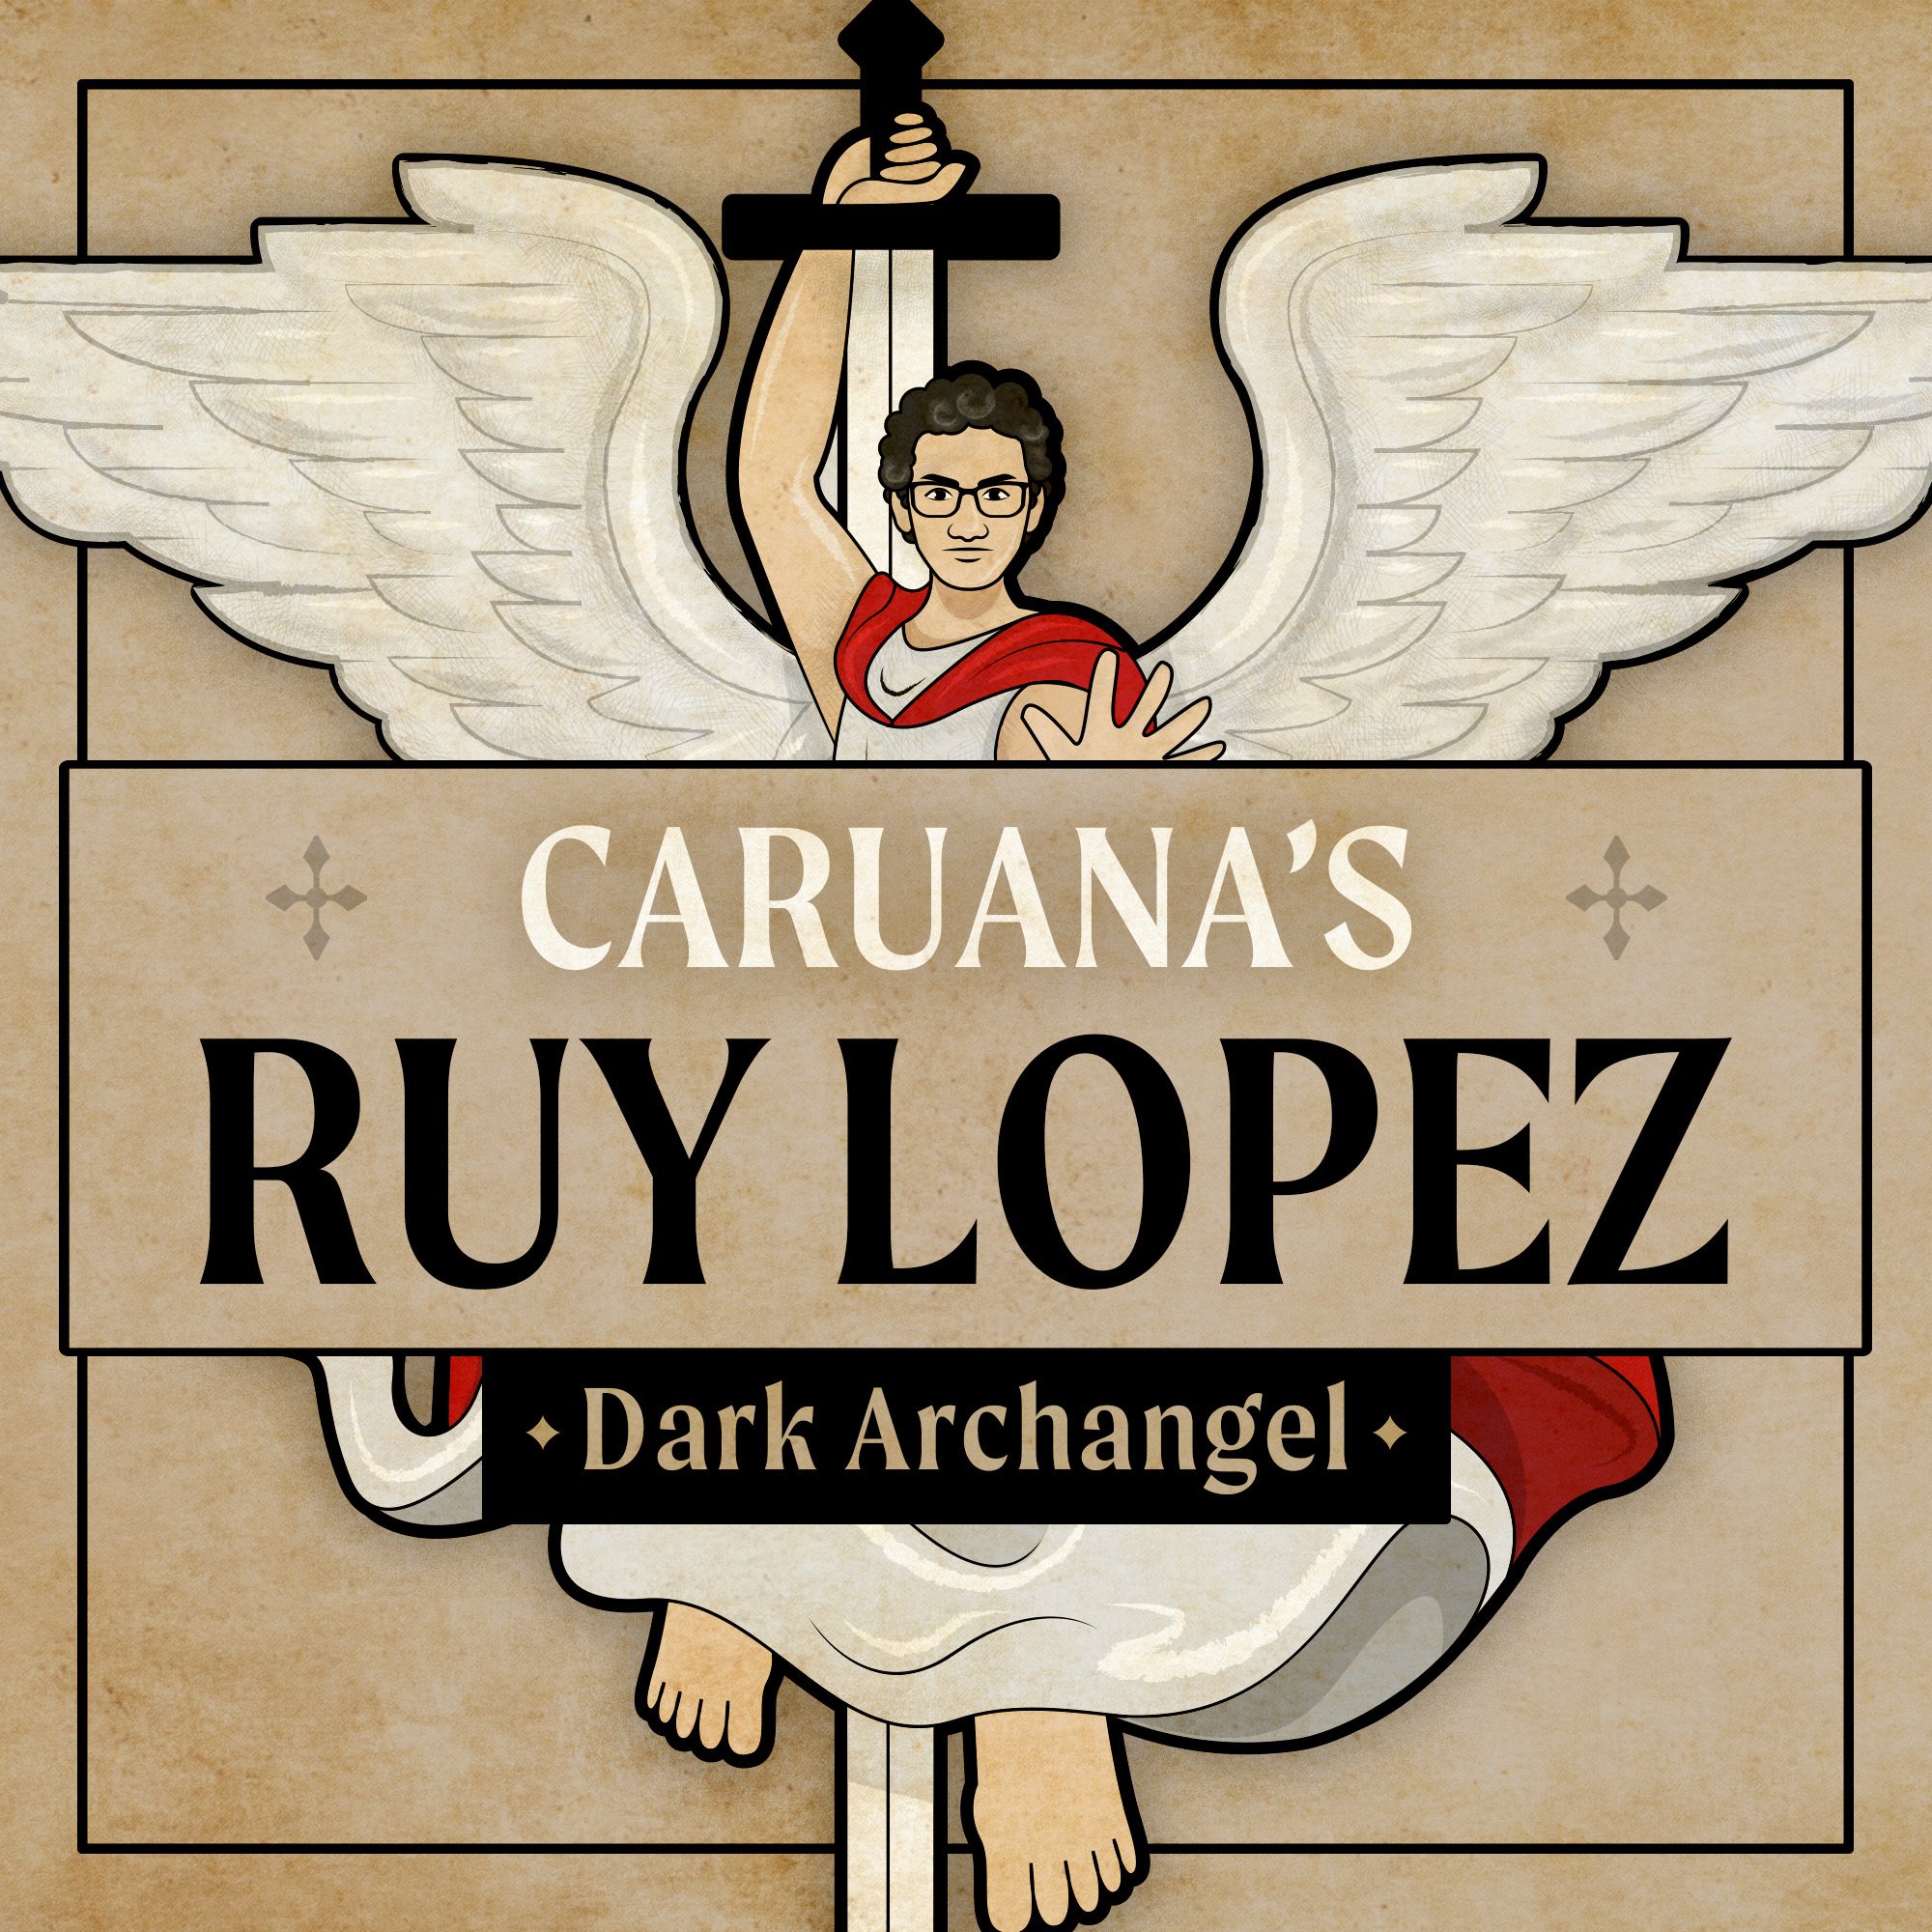 Caruana's Ruy Lopez: Dark Archangel